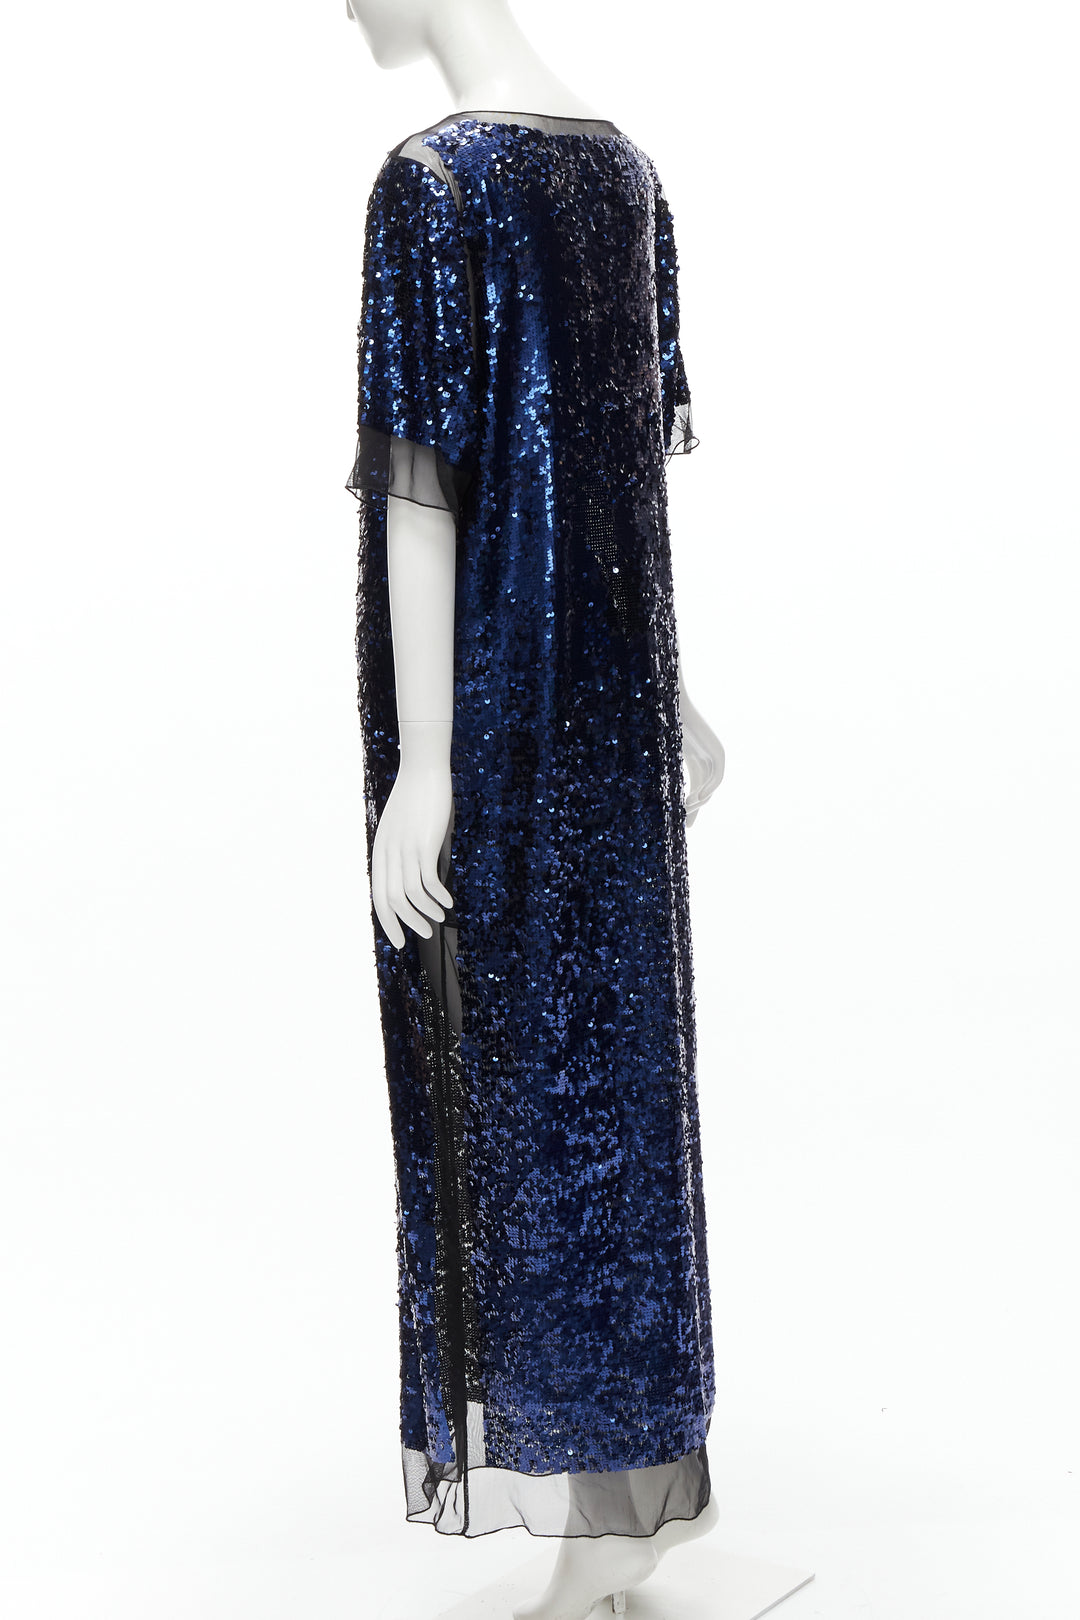 BY MALENE BIRGER blue sequins overlay black sheer evening gown dress M